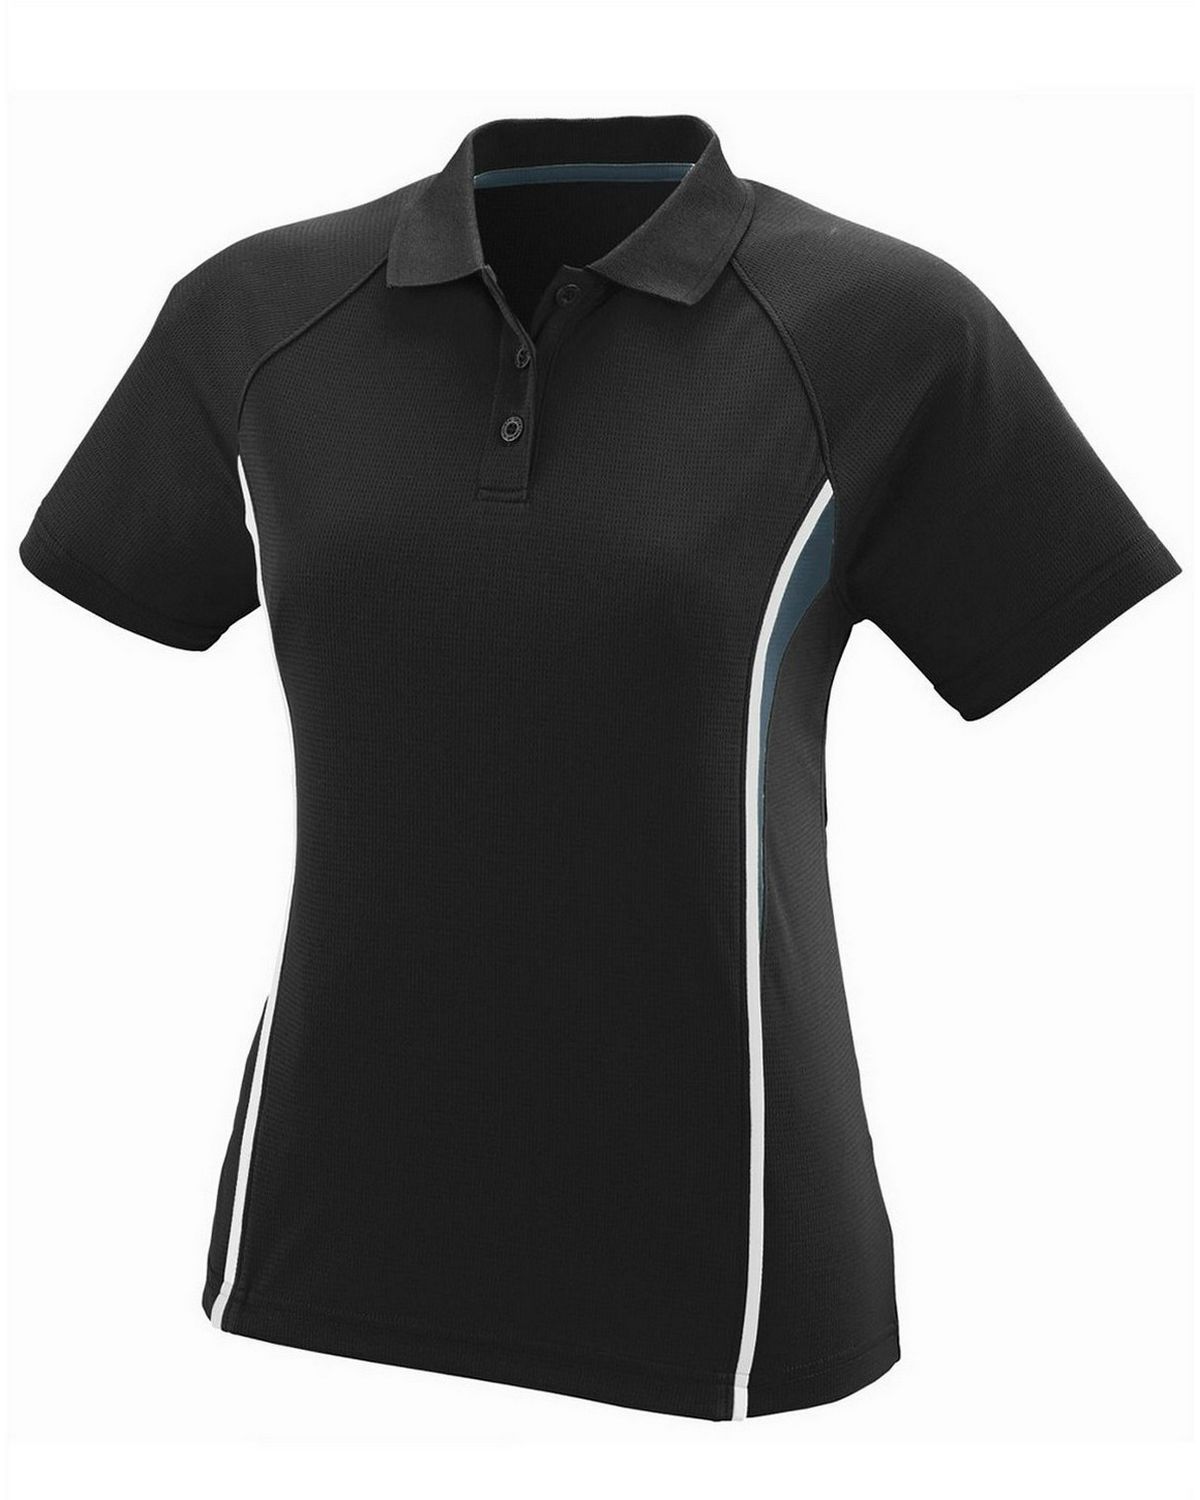 Augusta Sportswear 5024 Women's Wicking Polyester Mesh Sport Shirt